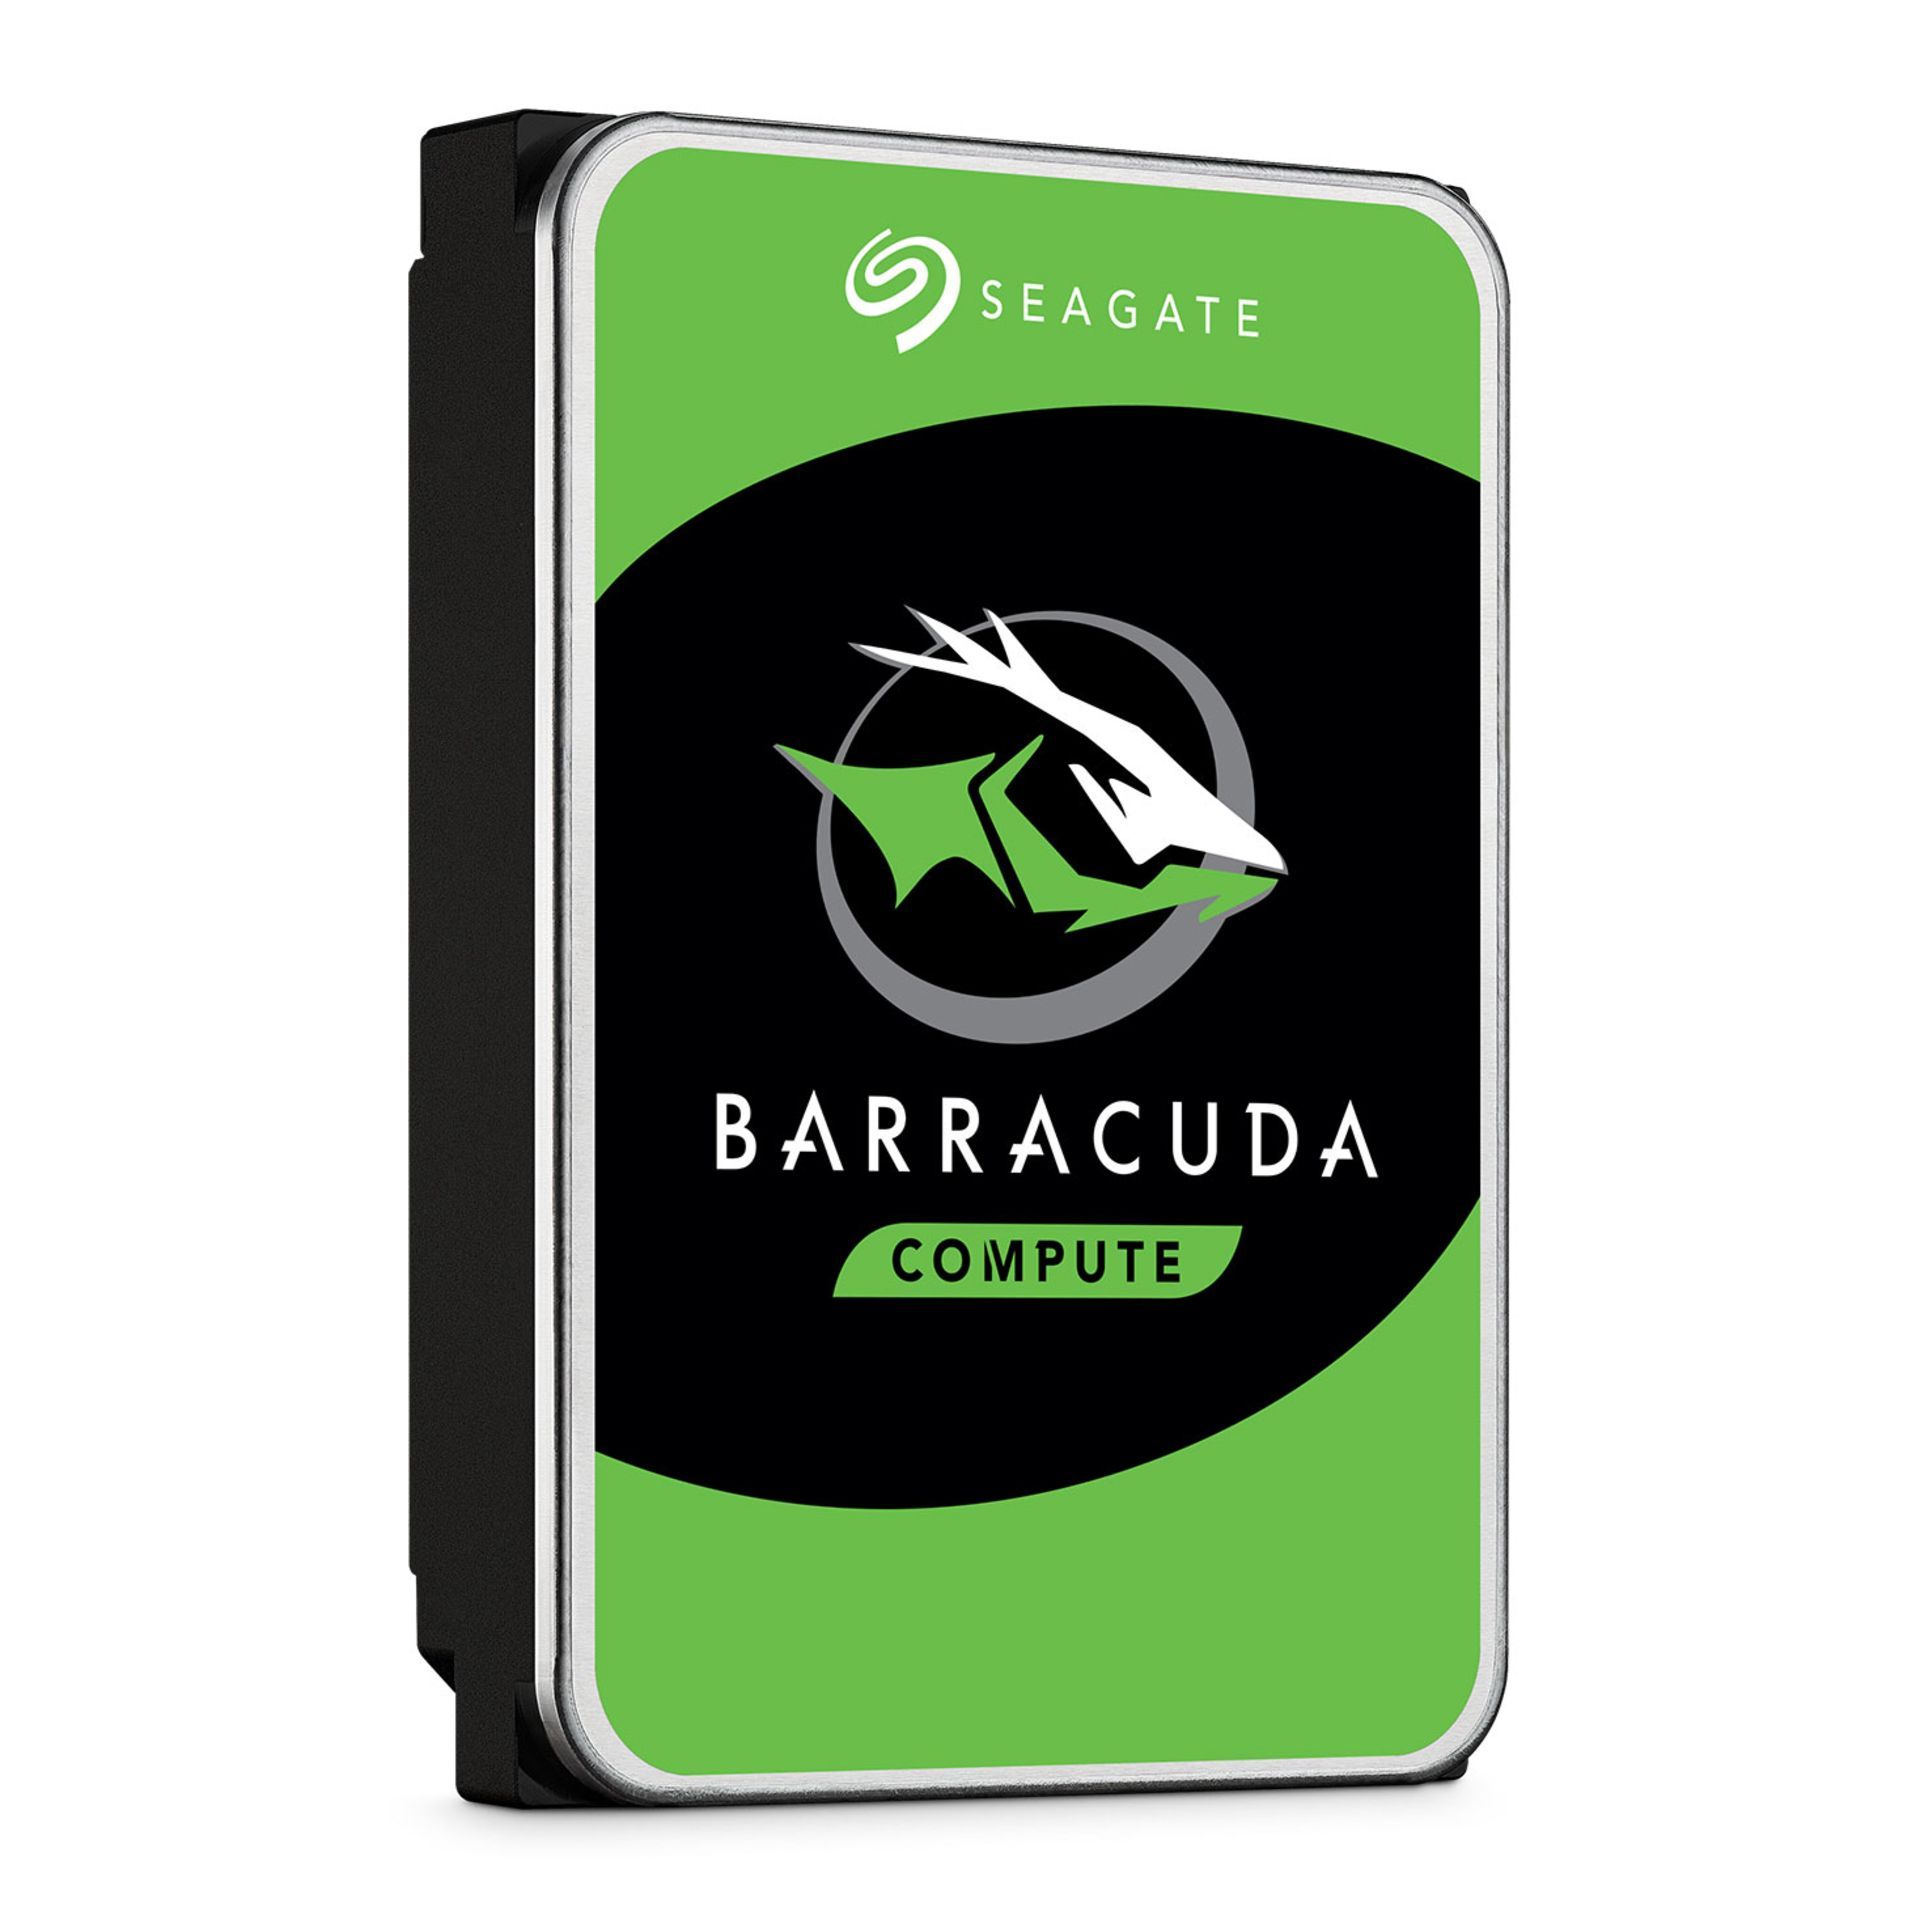 NEW & BOXED SEAGATE BarraCuda 4 TB Internal Hard Drive HDD. RRP £122.99. 3.5 Inch SATA 6 Gb/s 5400